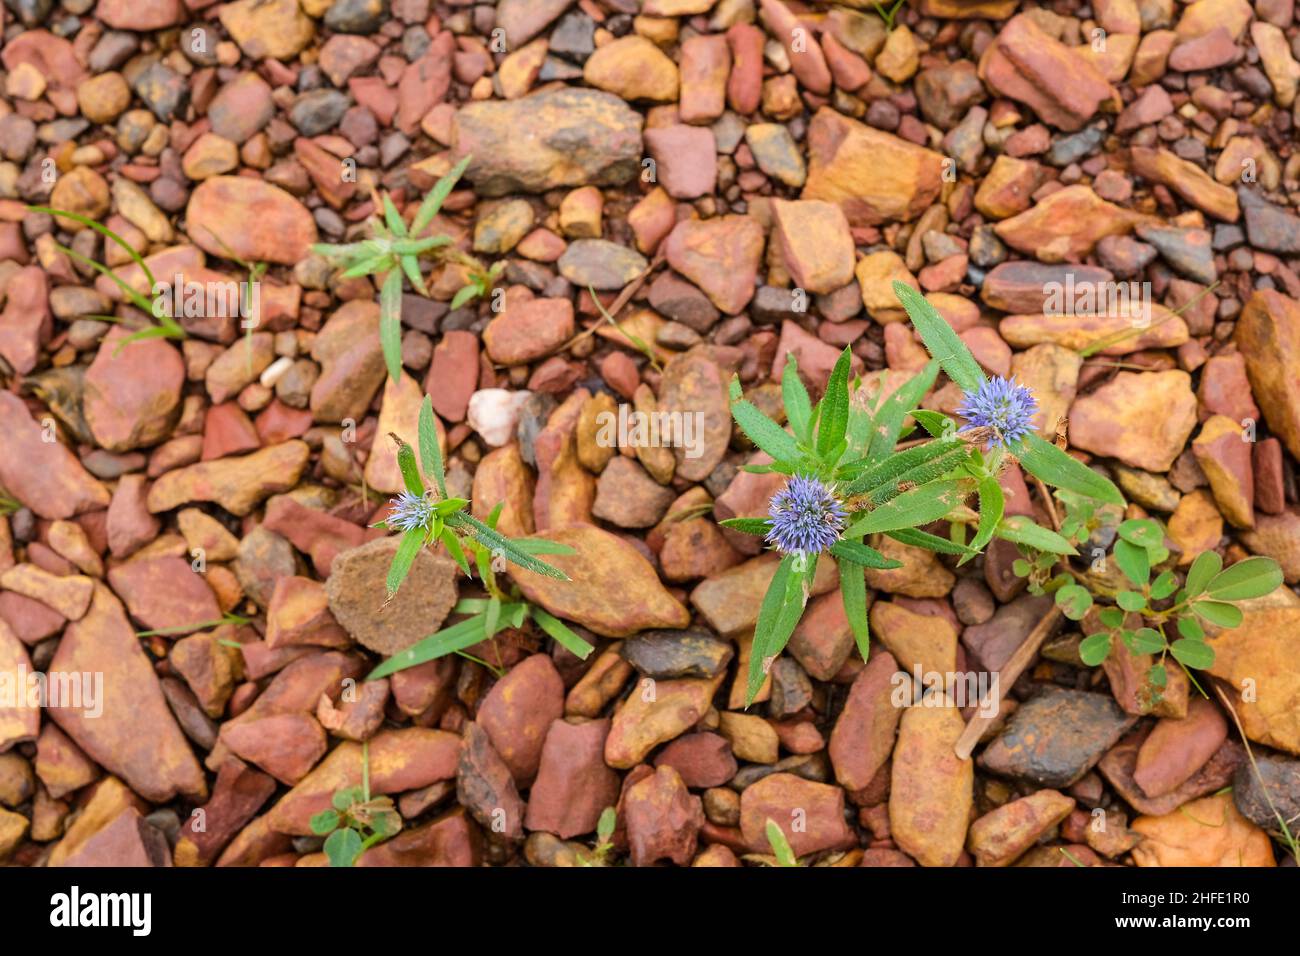 Purple flower growing among rocks and stones Stock Photo